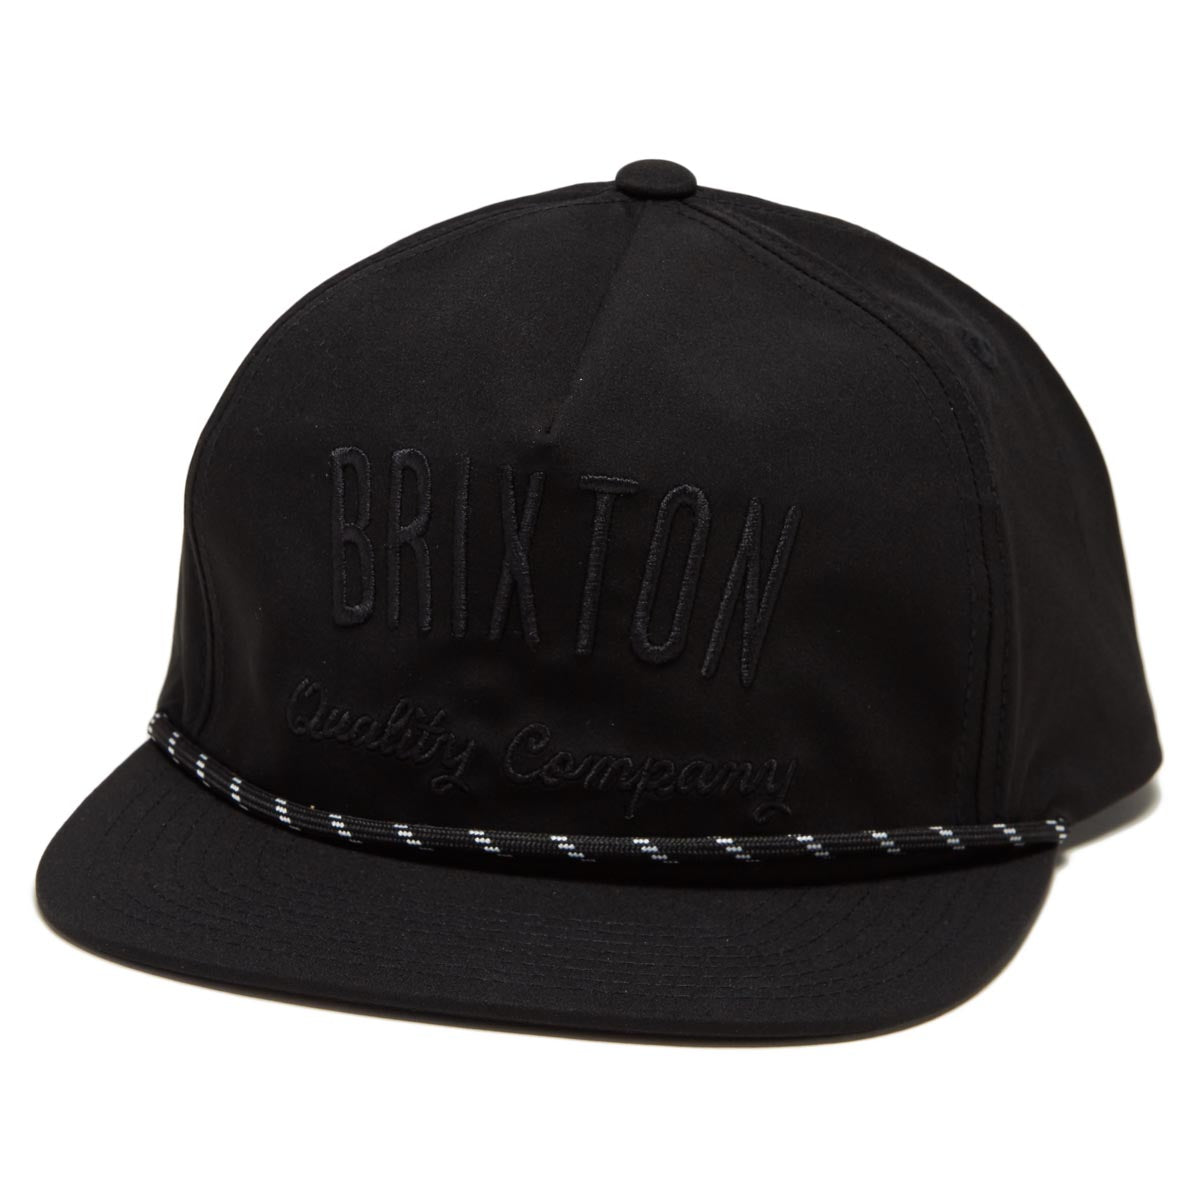 Brixton Persist Mp Snapback Hat - Black image 1